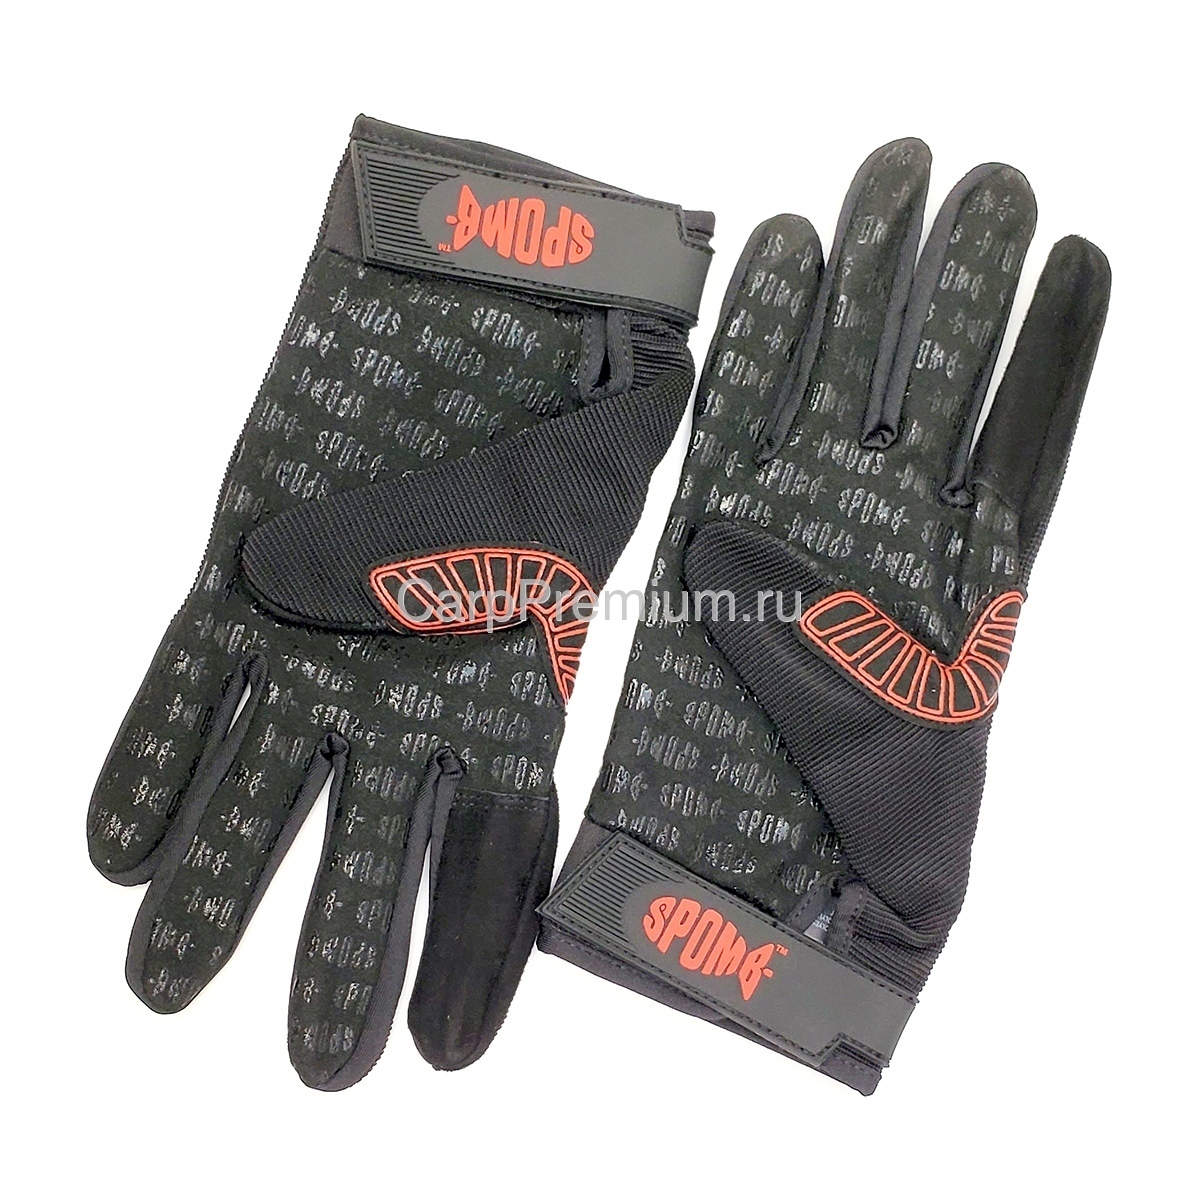 Защитная пара перчаток для заброса Spomb (Спомб) - Pro Casting Glove, Размер L-XL